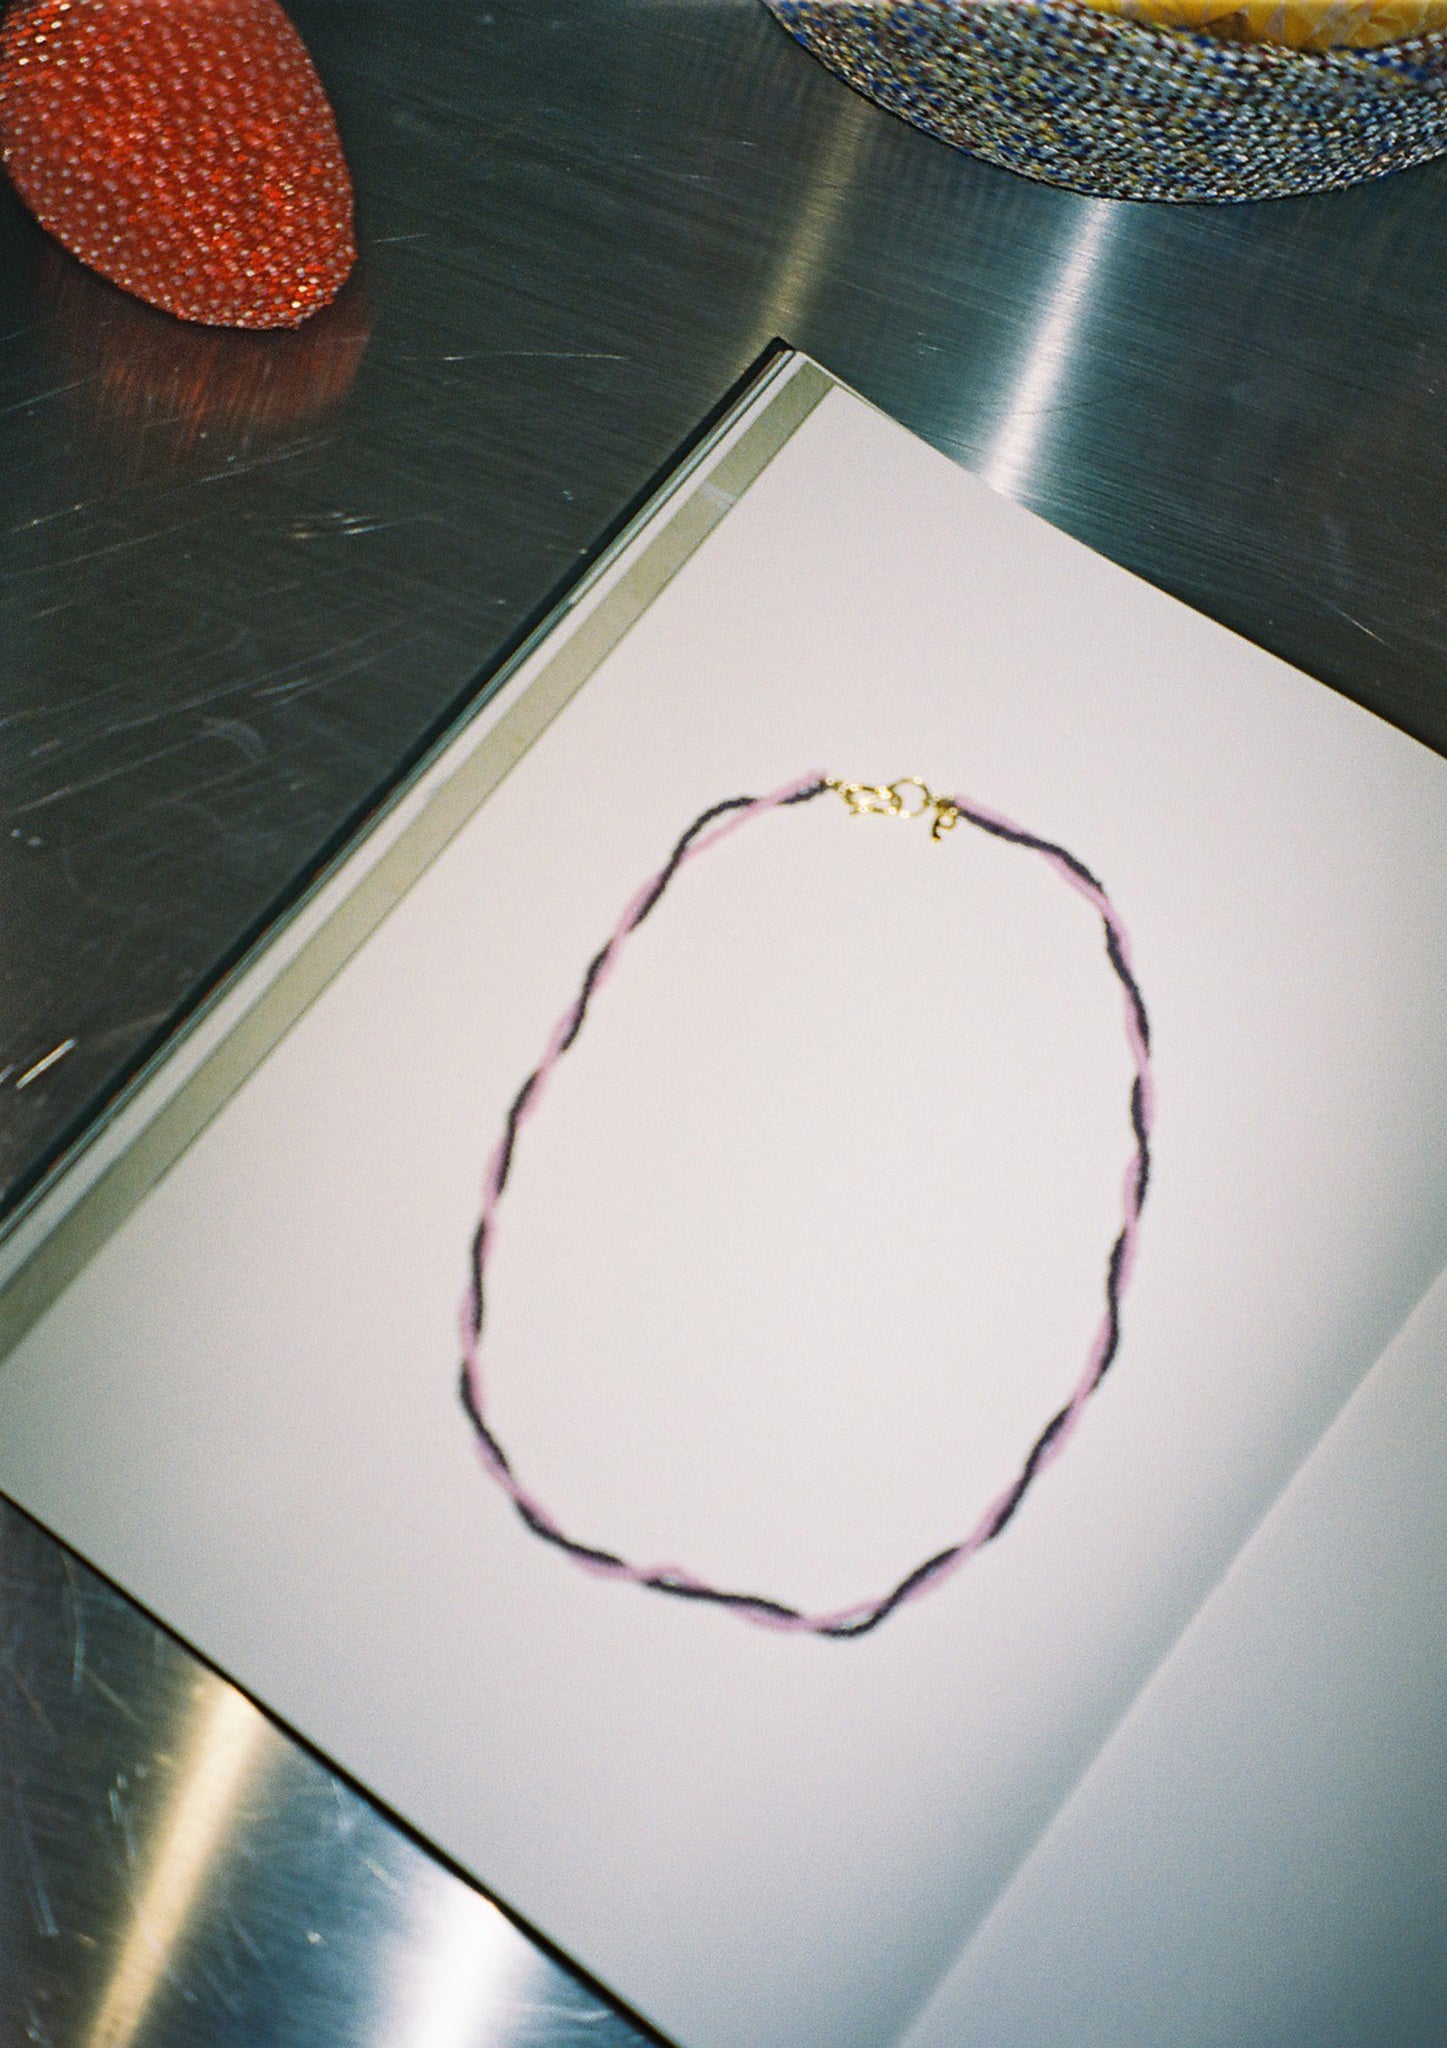 Twister Pink Purple Necklace